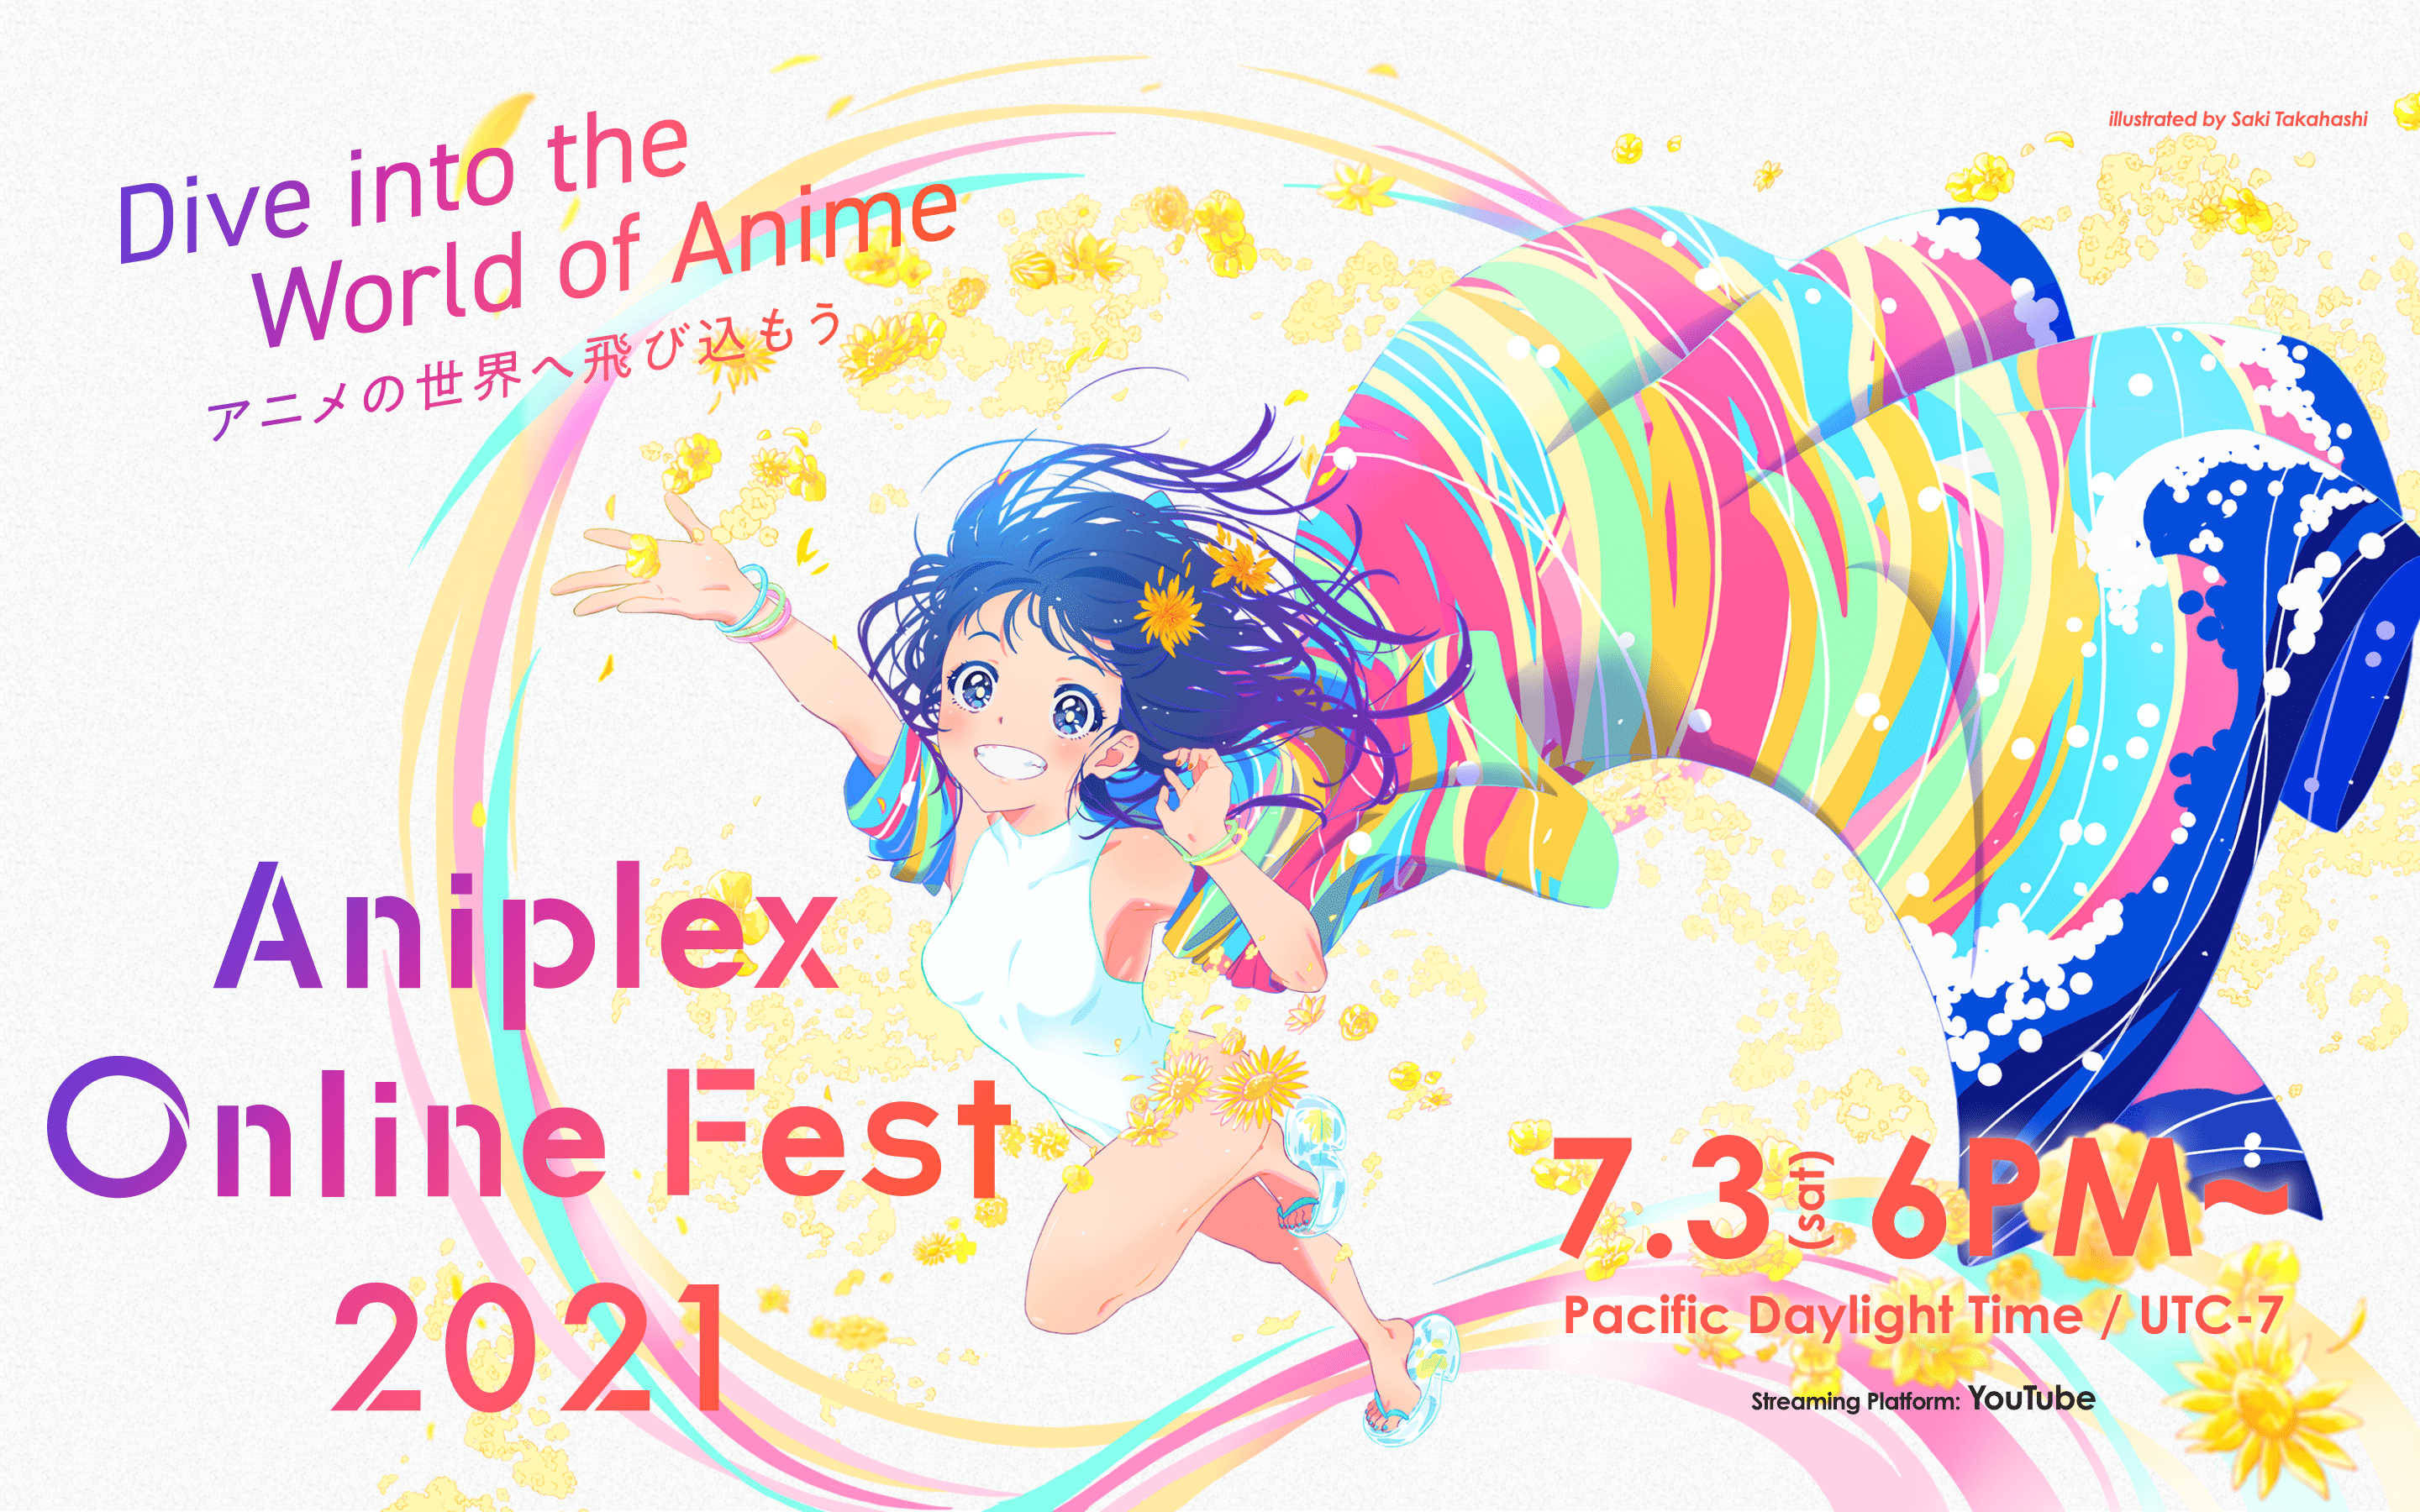 aniplex online fest 2021